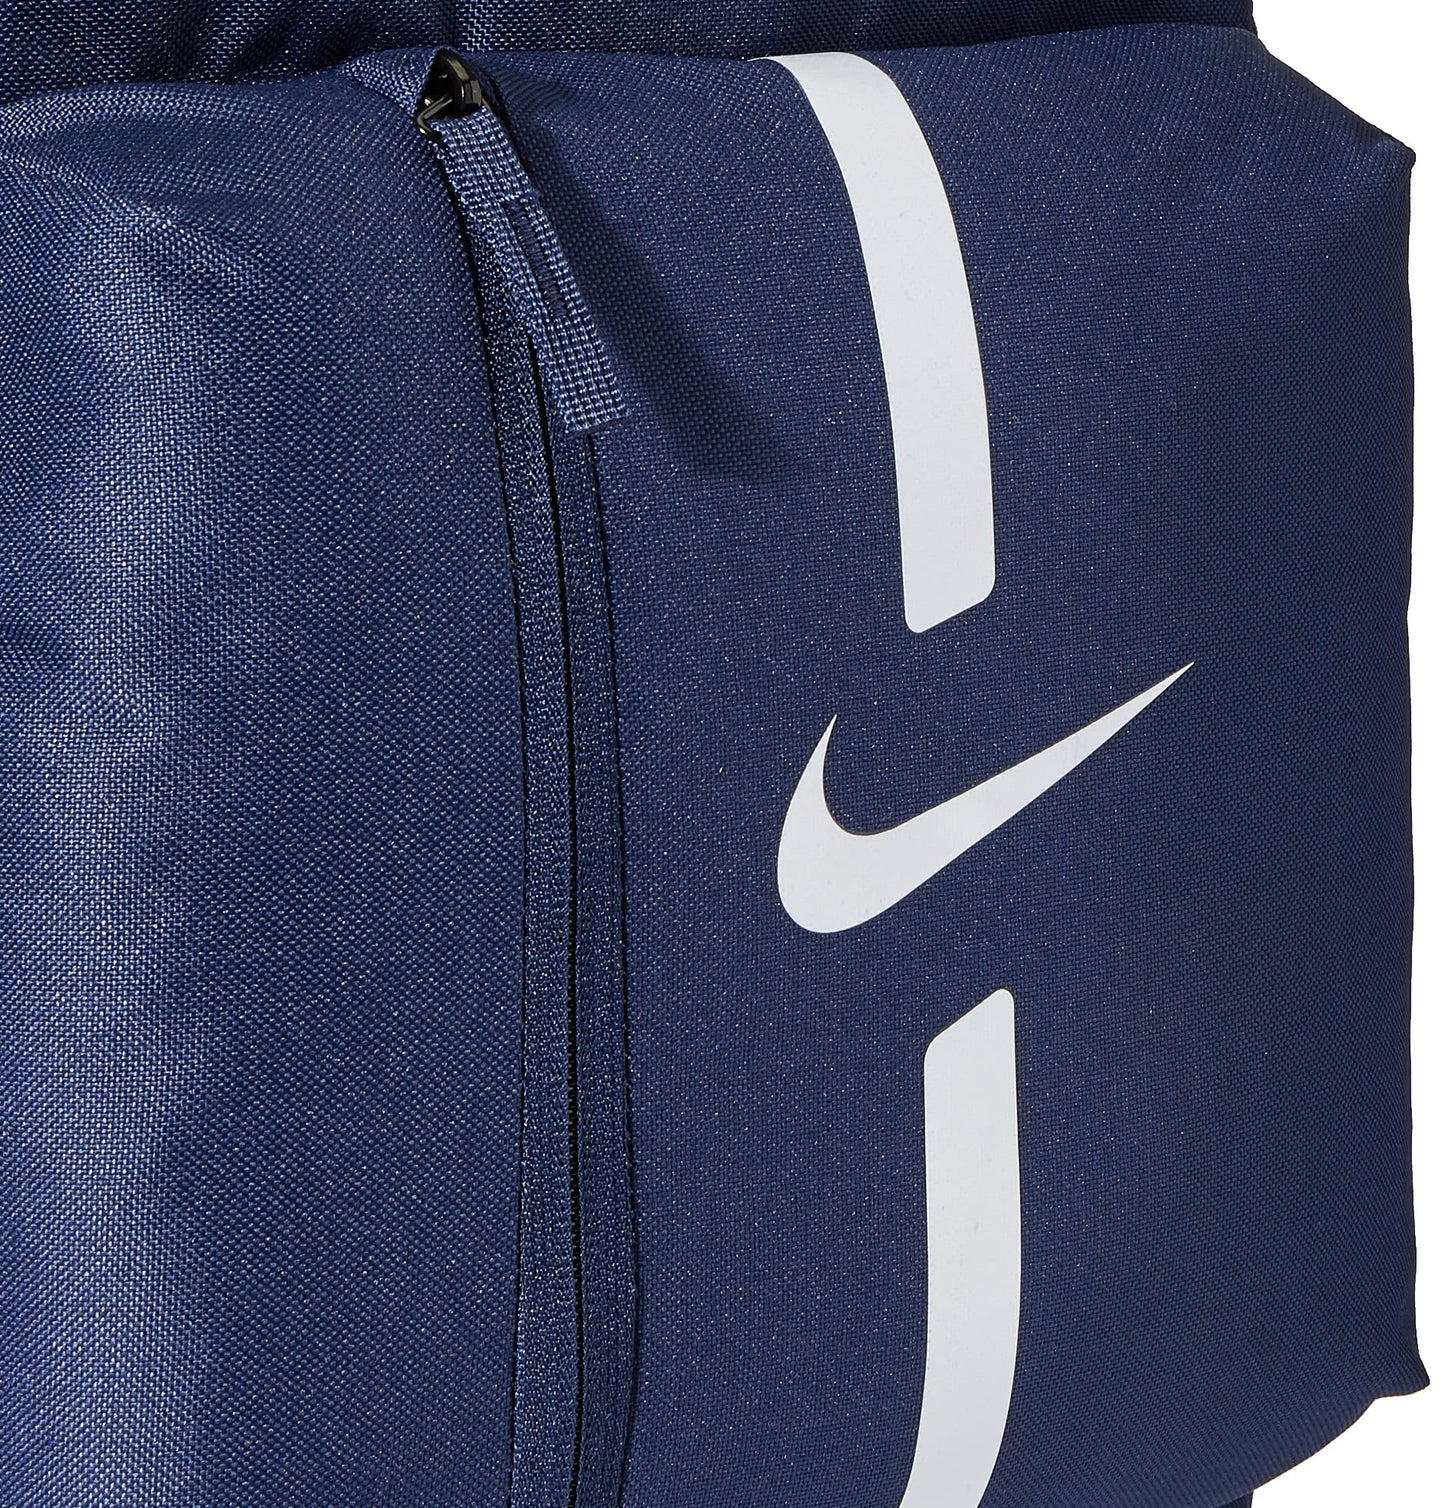 Nike Unisex-Youth Academy Team Backpack